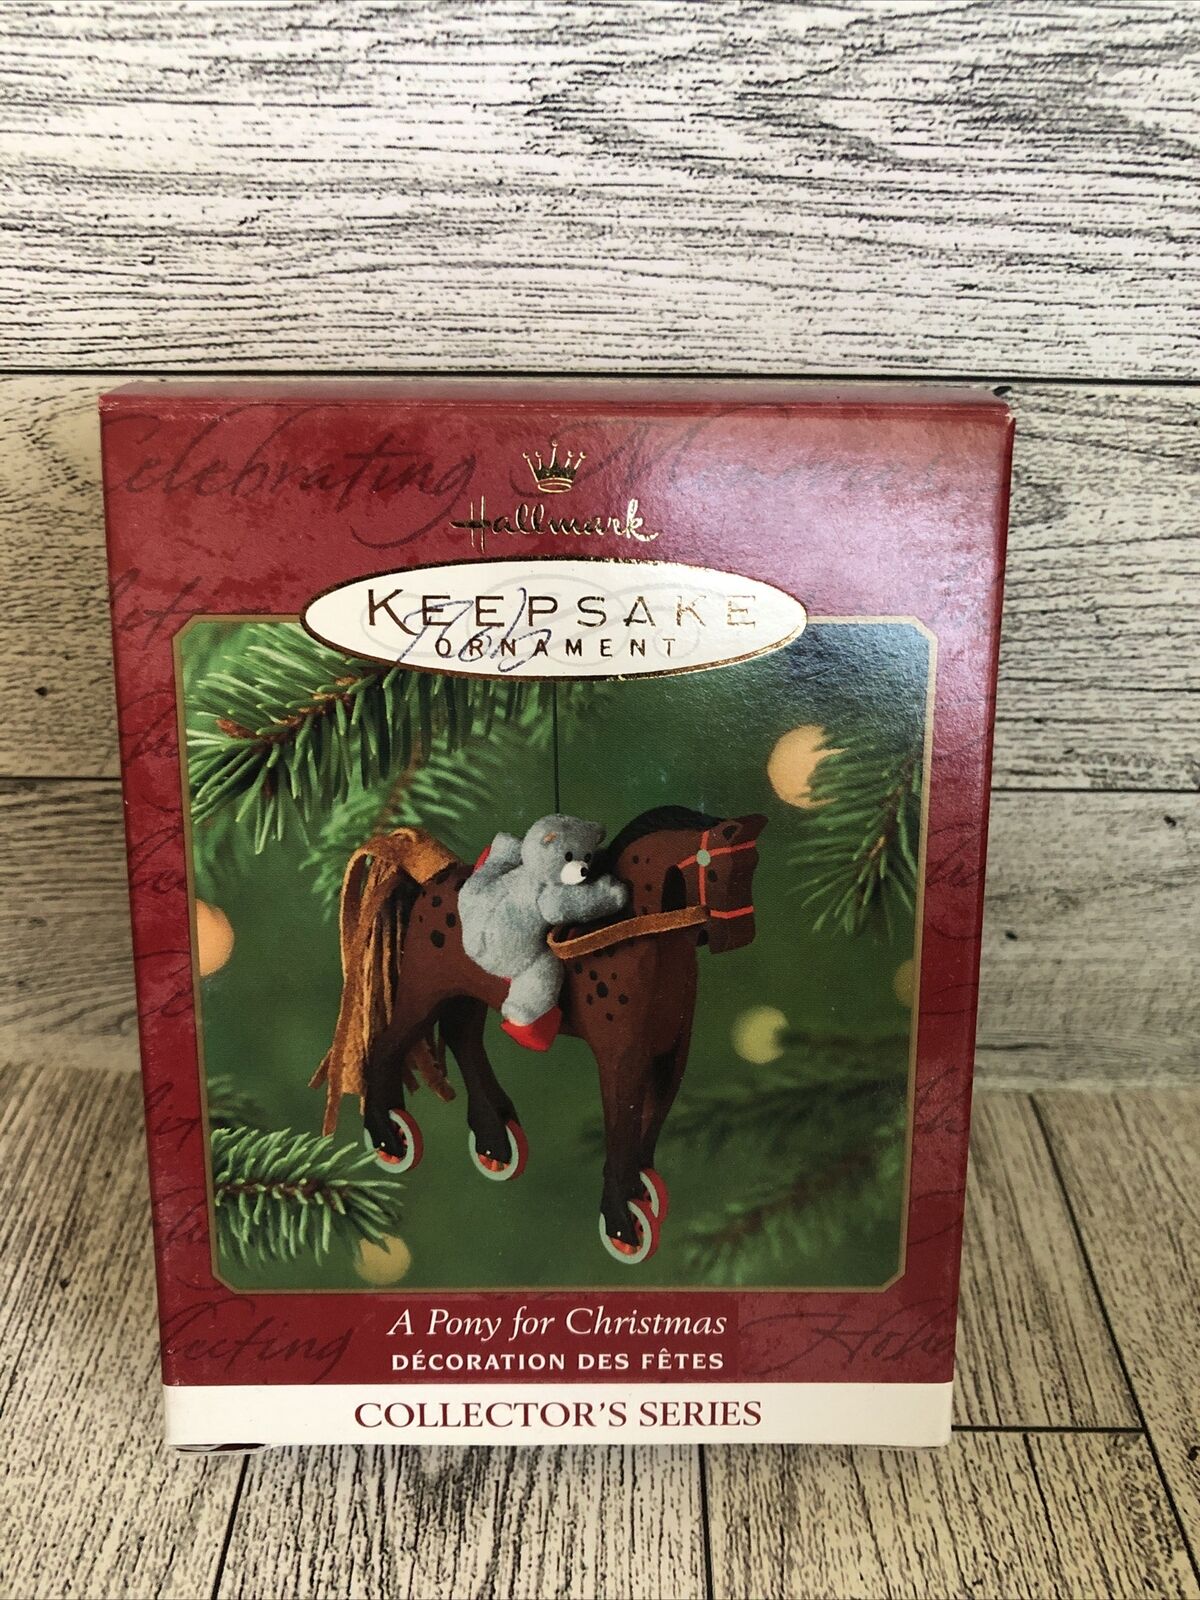 2001 Hallmark Keepsake Ornament A Pony For Christmas 4th In Series